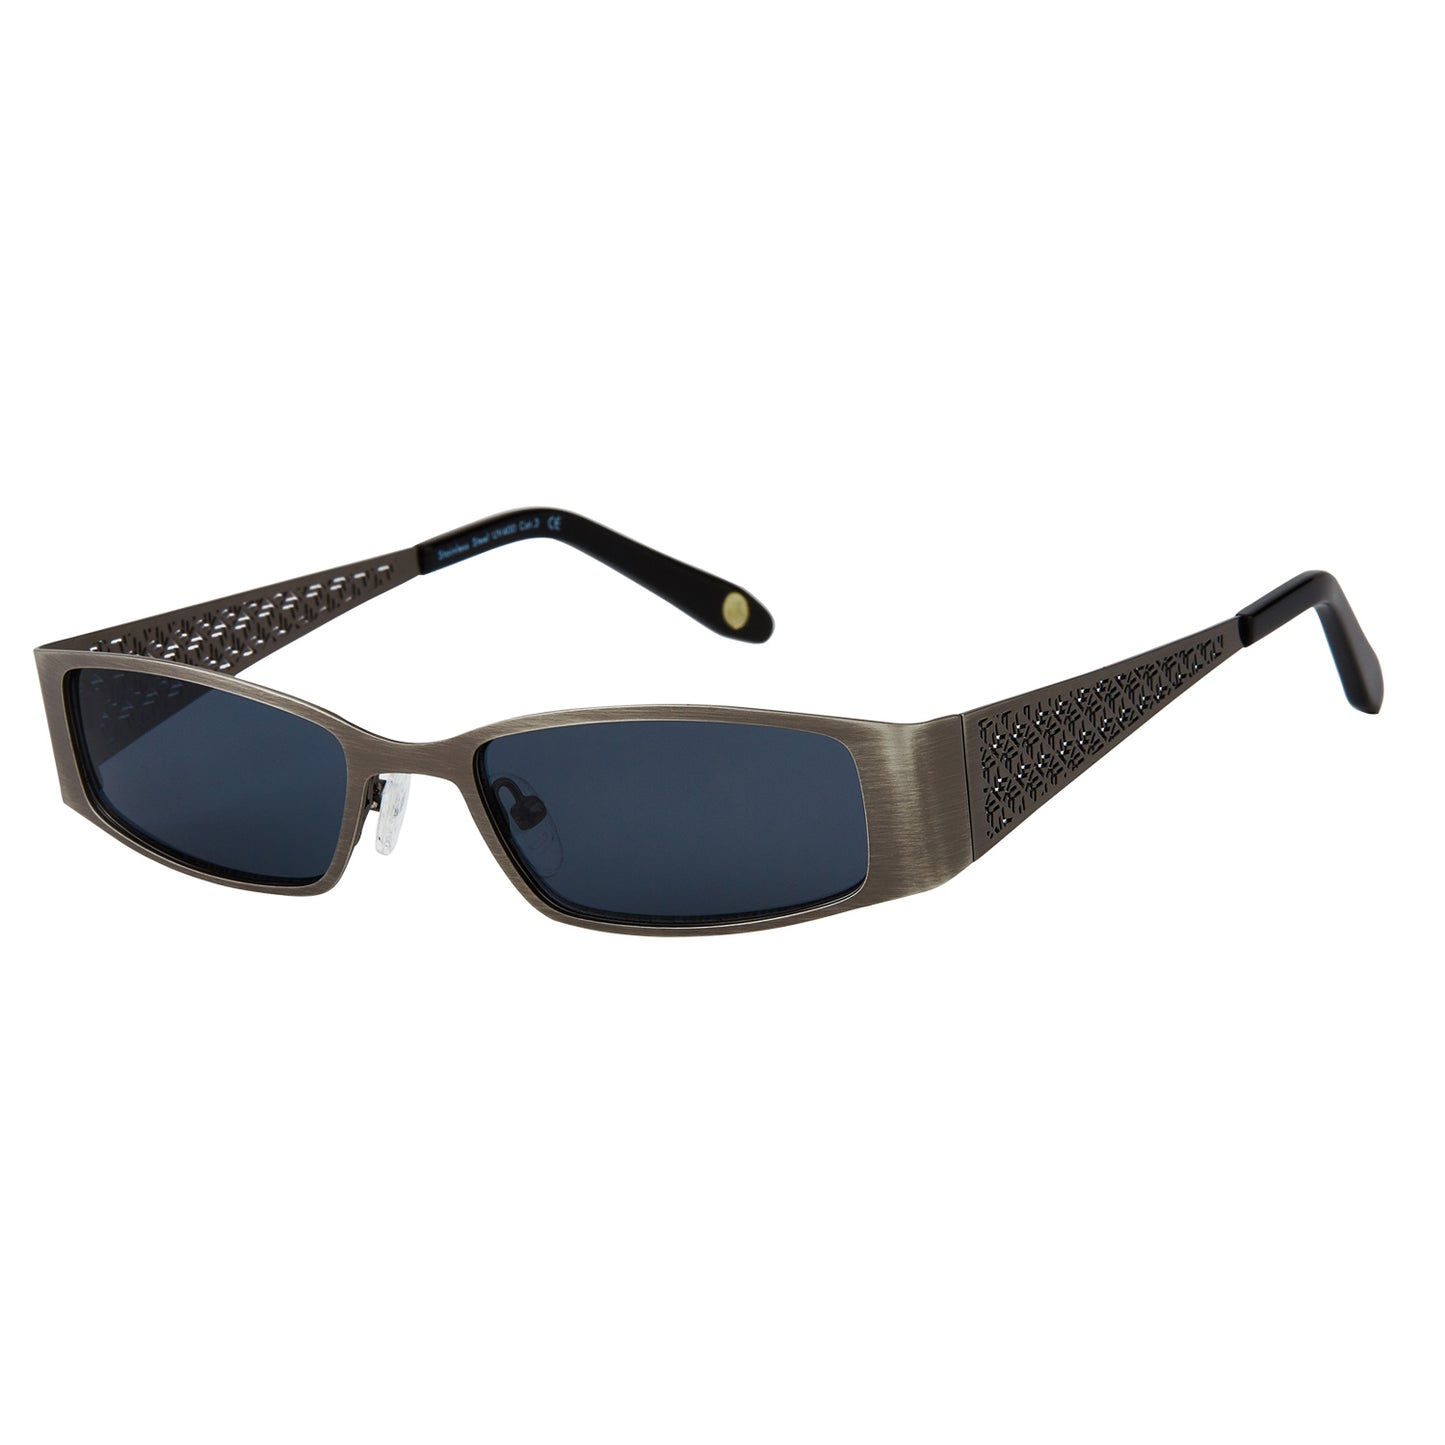 Mokki Slim Boss sunglasses in grey